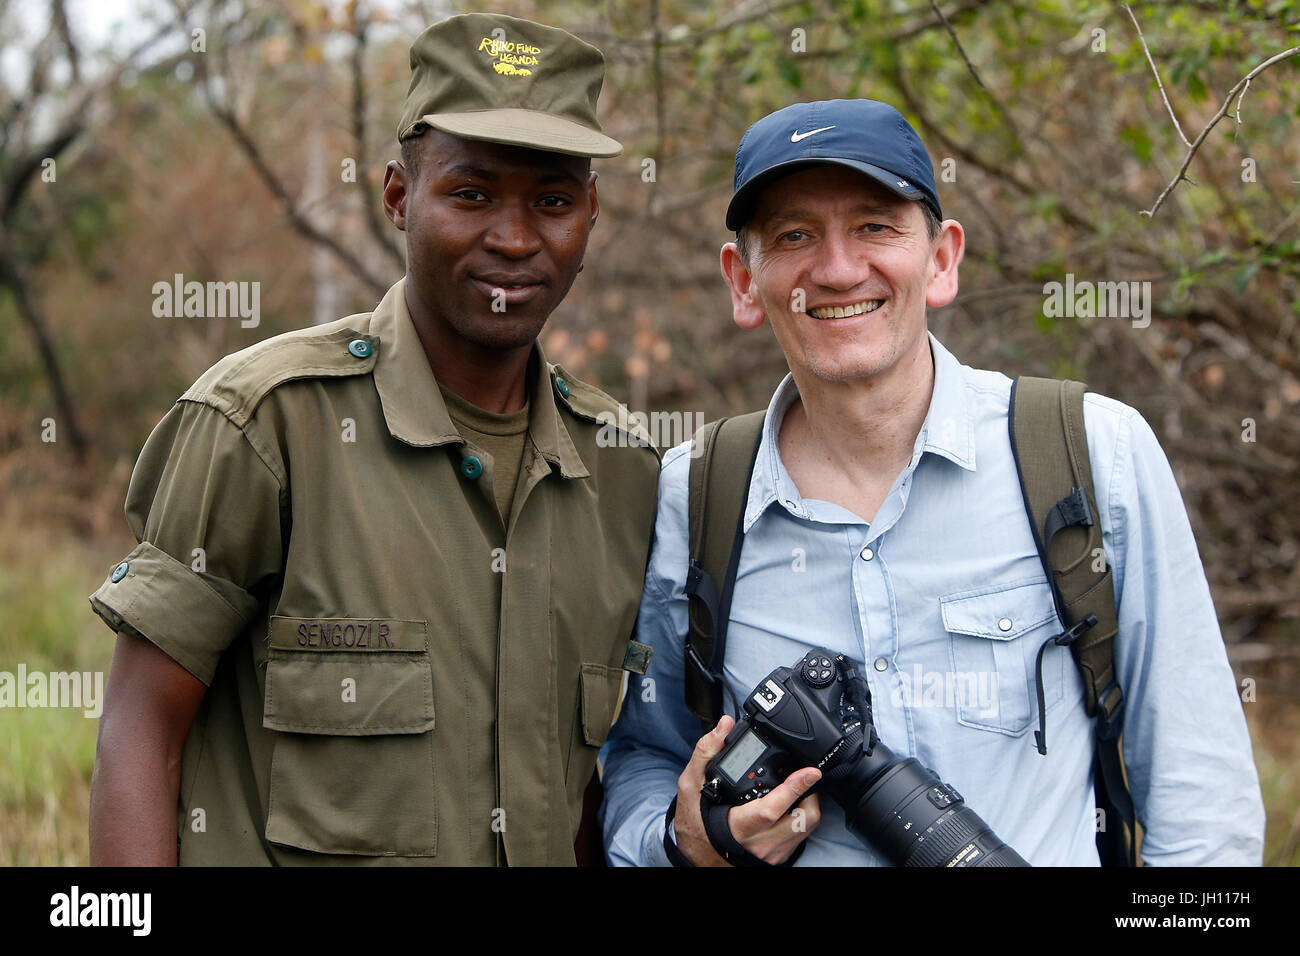 Ranger and tourist in Ziwa national park. Uganda. Stock Photo